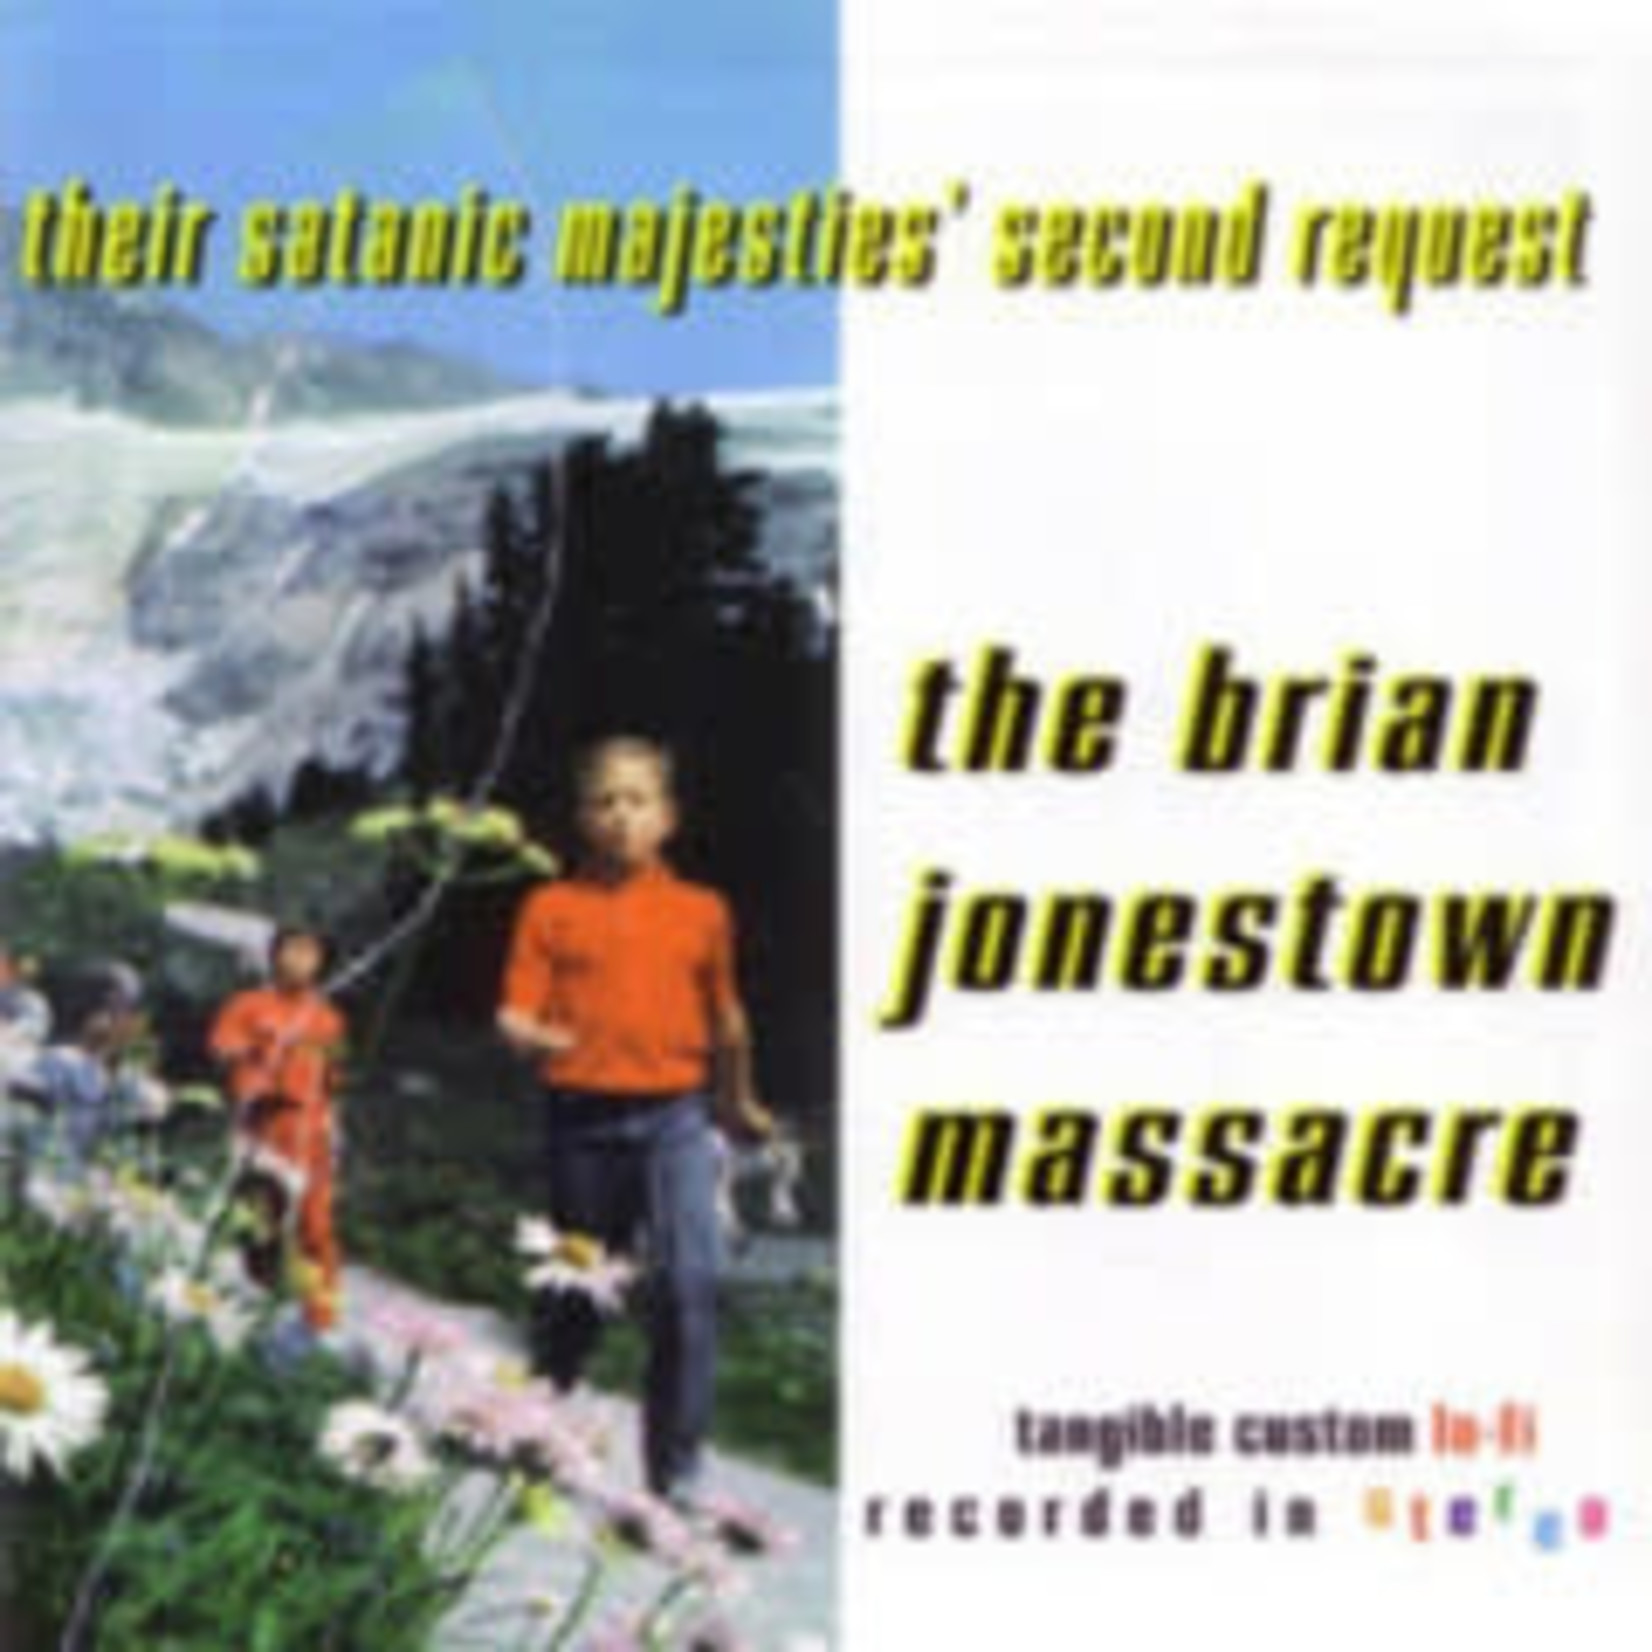 Brian Jonestown Massacre - Their Satanic Majesties' Second Request [CD]